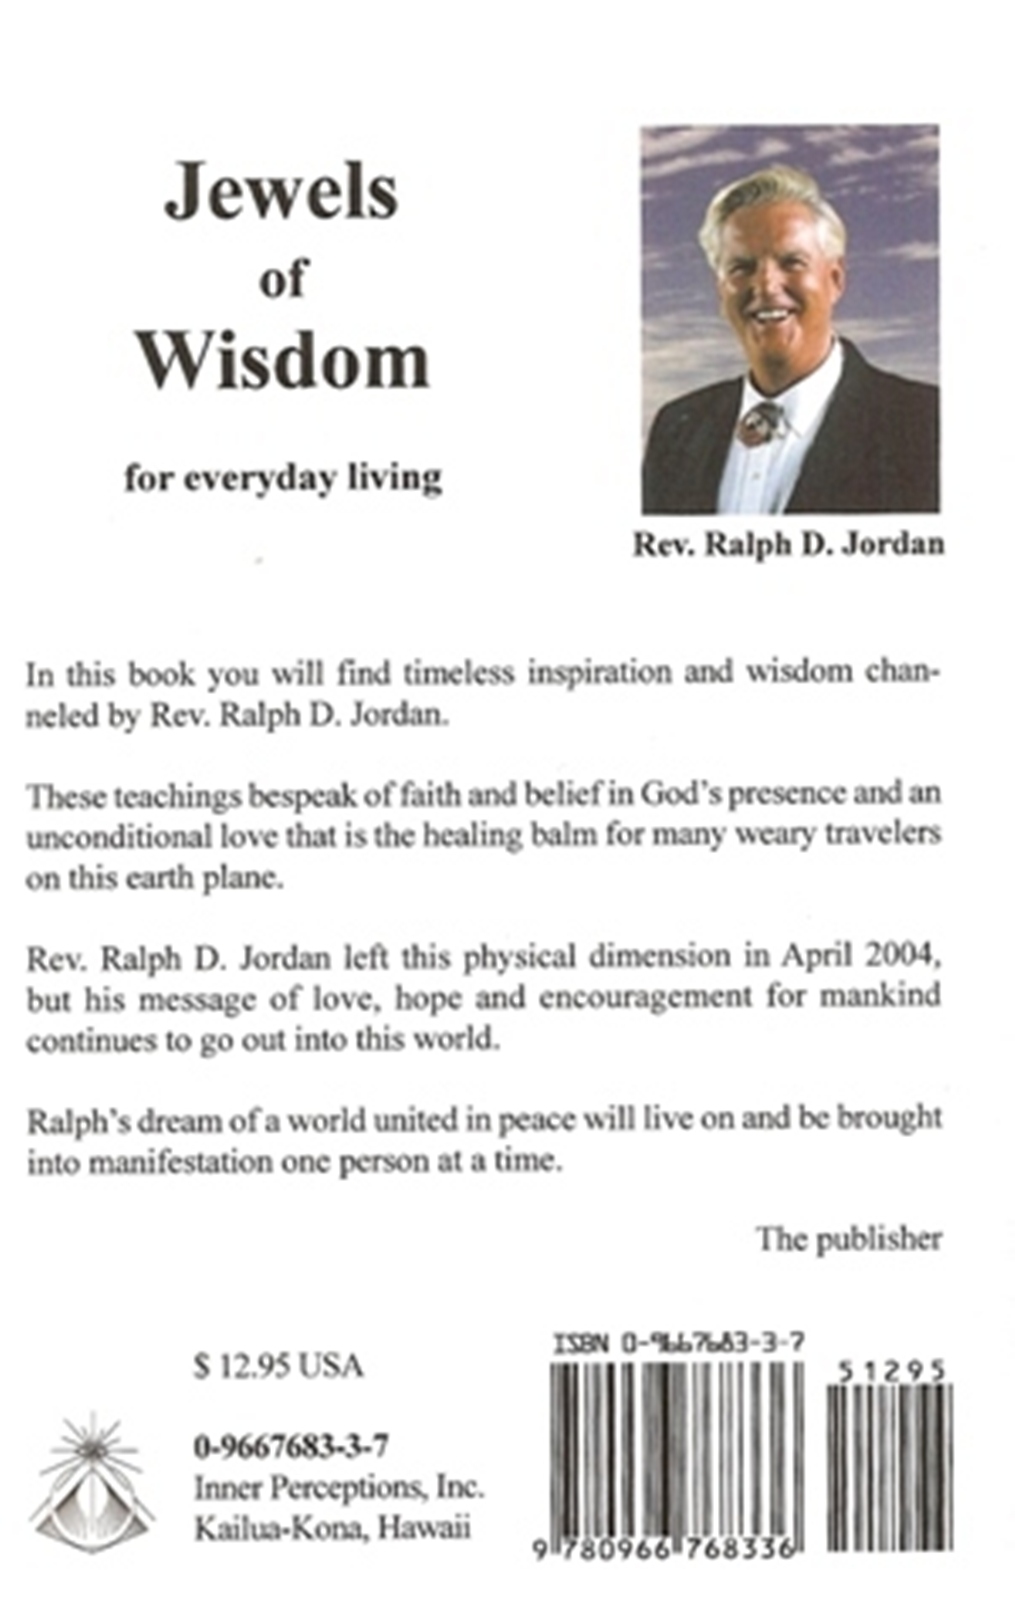 Jewels of Wisdom for everyday living, Rev. Ralph D. Jordan